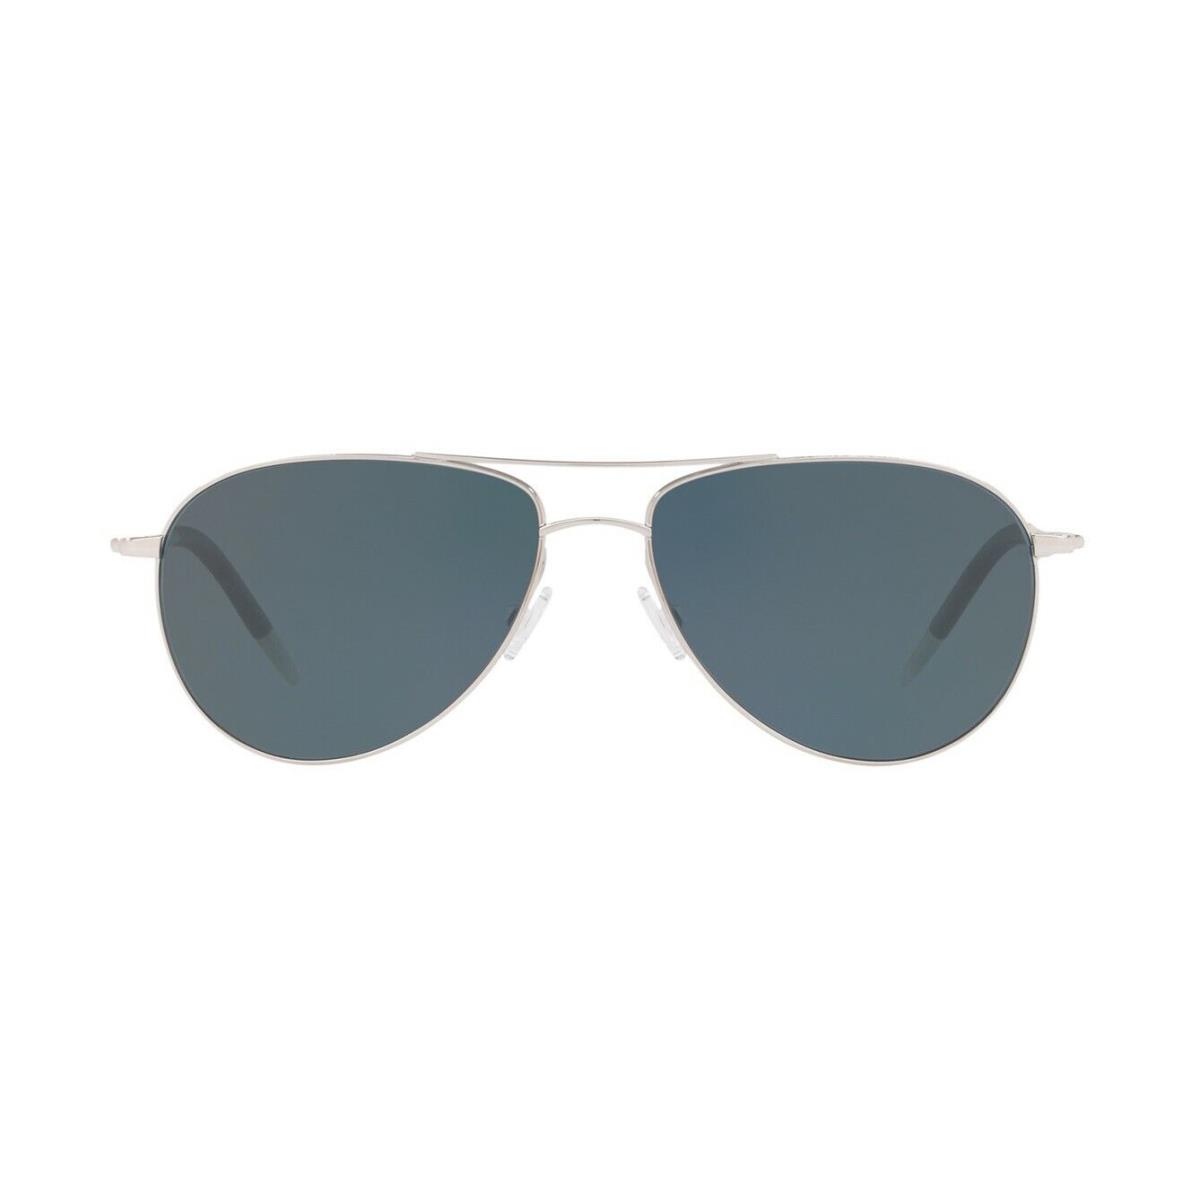 Oliver Peoples Benedict OV 1002S Silver/blue Vfx Polarized 5036/3R Sunglasses - Frame: Silver, Lens: Blue